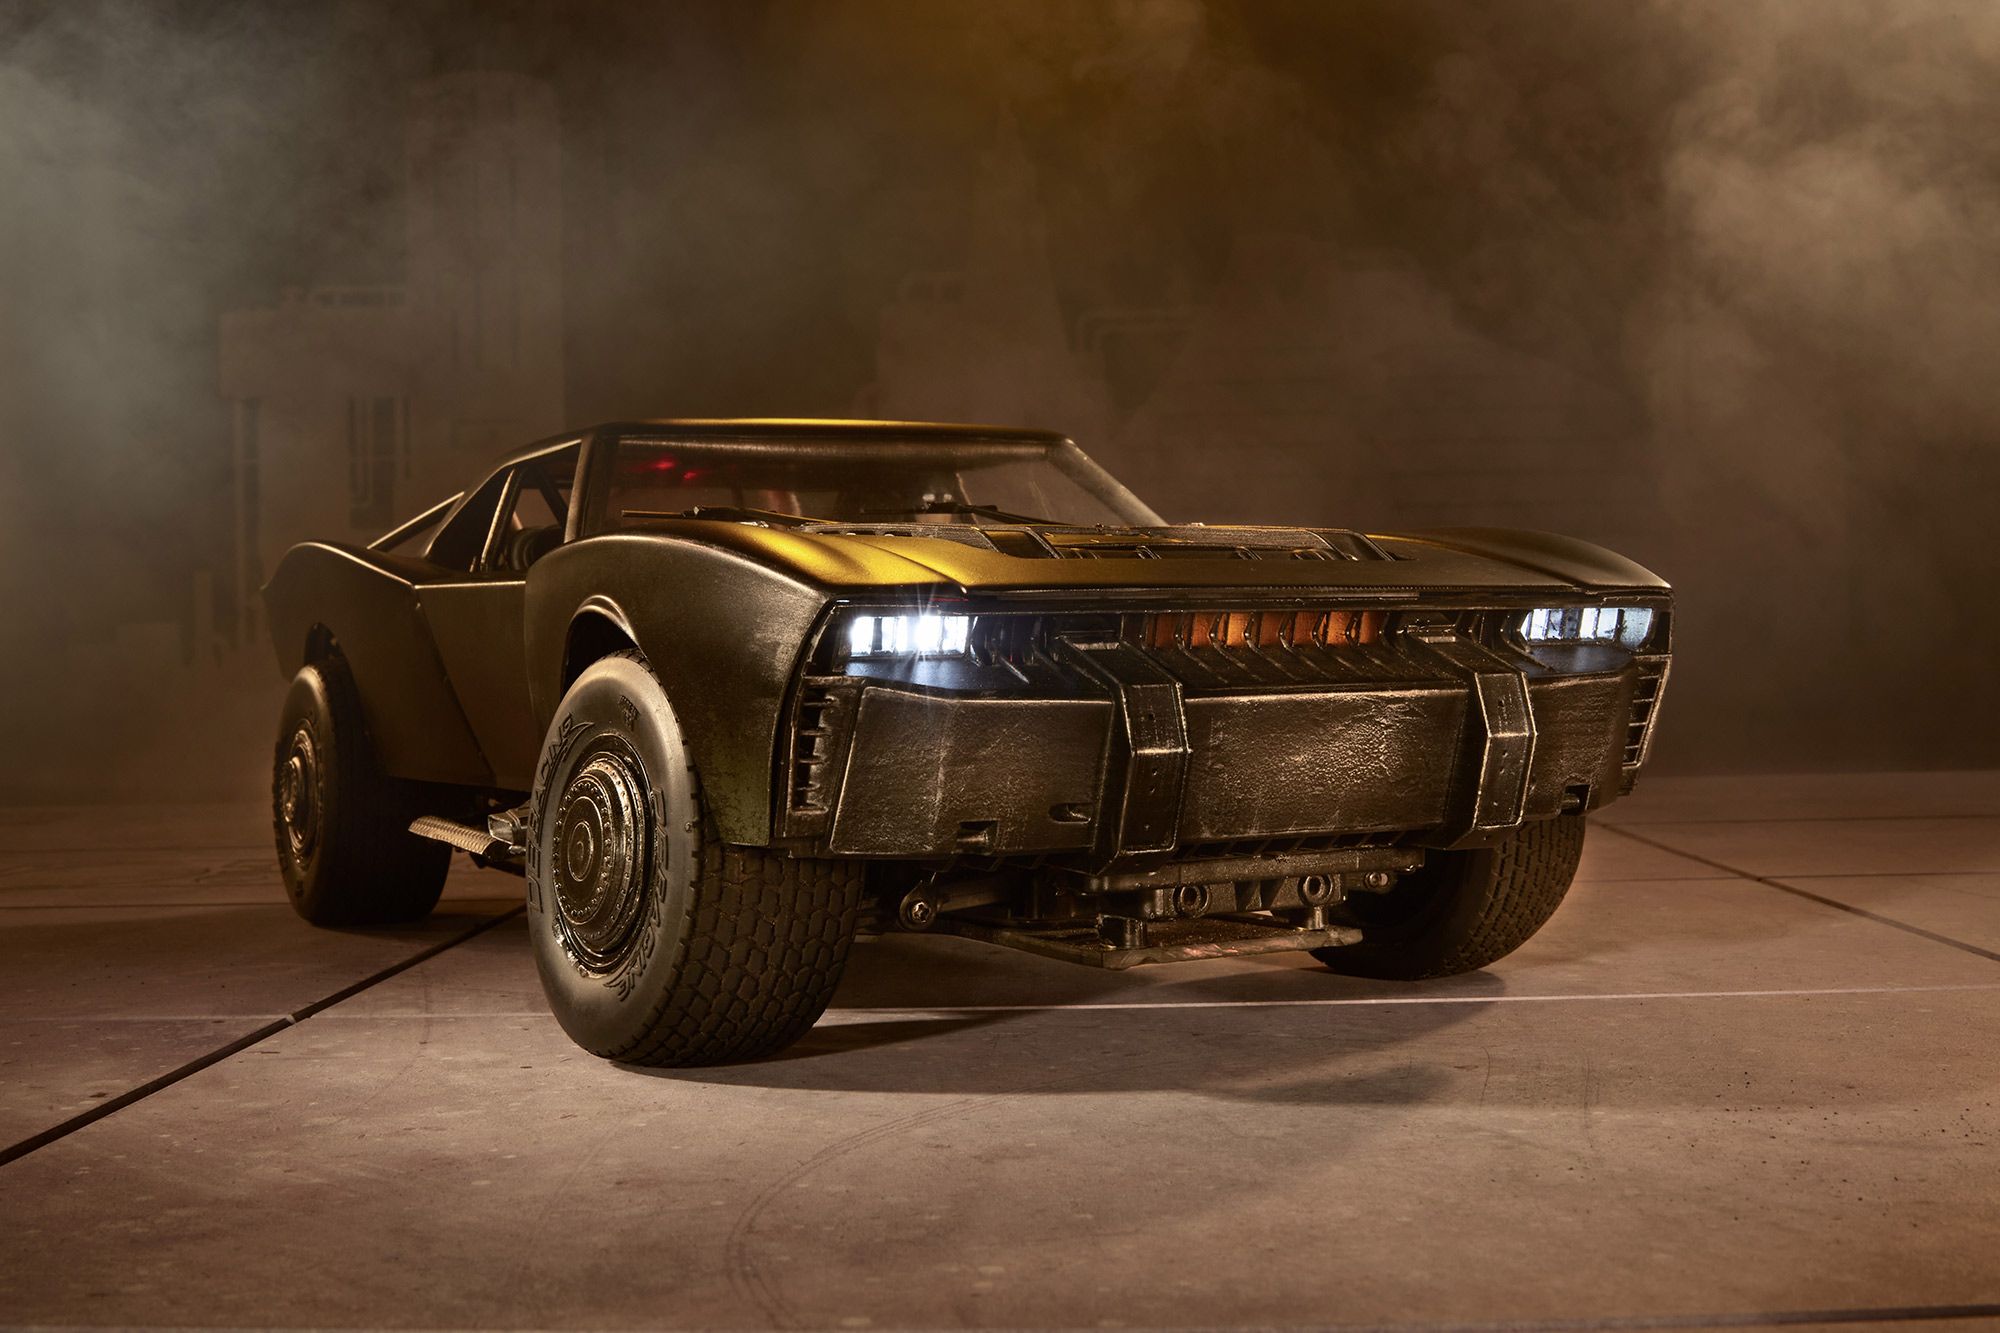 Hot Wheels Announces Batmobile RC For The Batman With Lights & Smoke